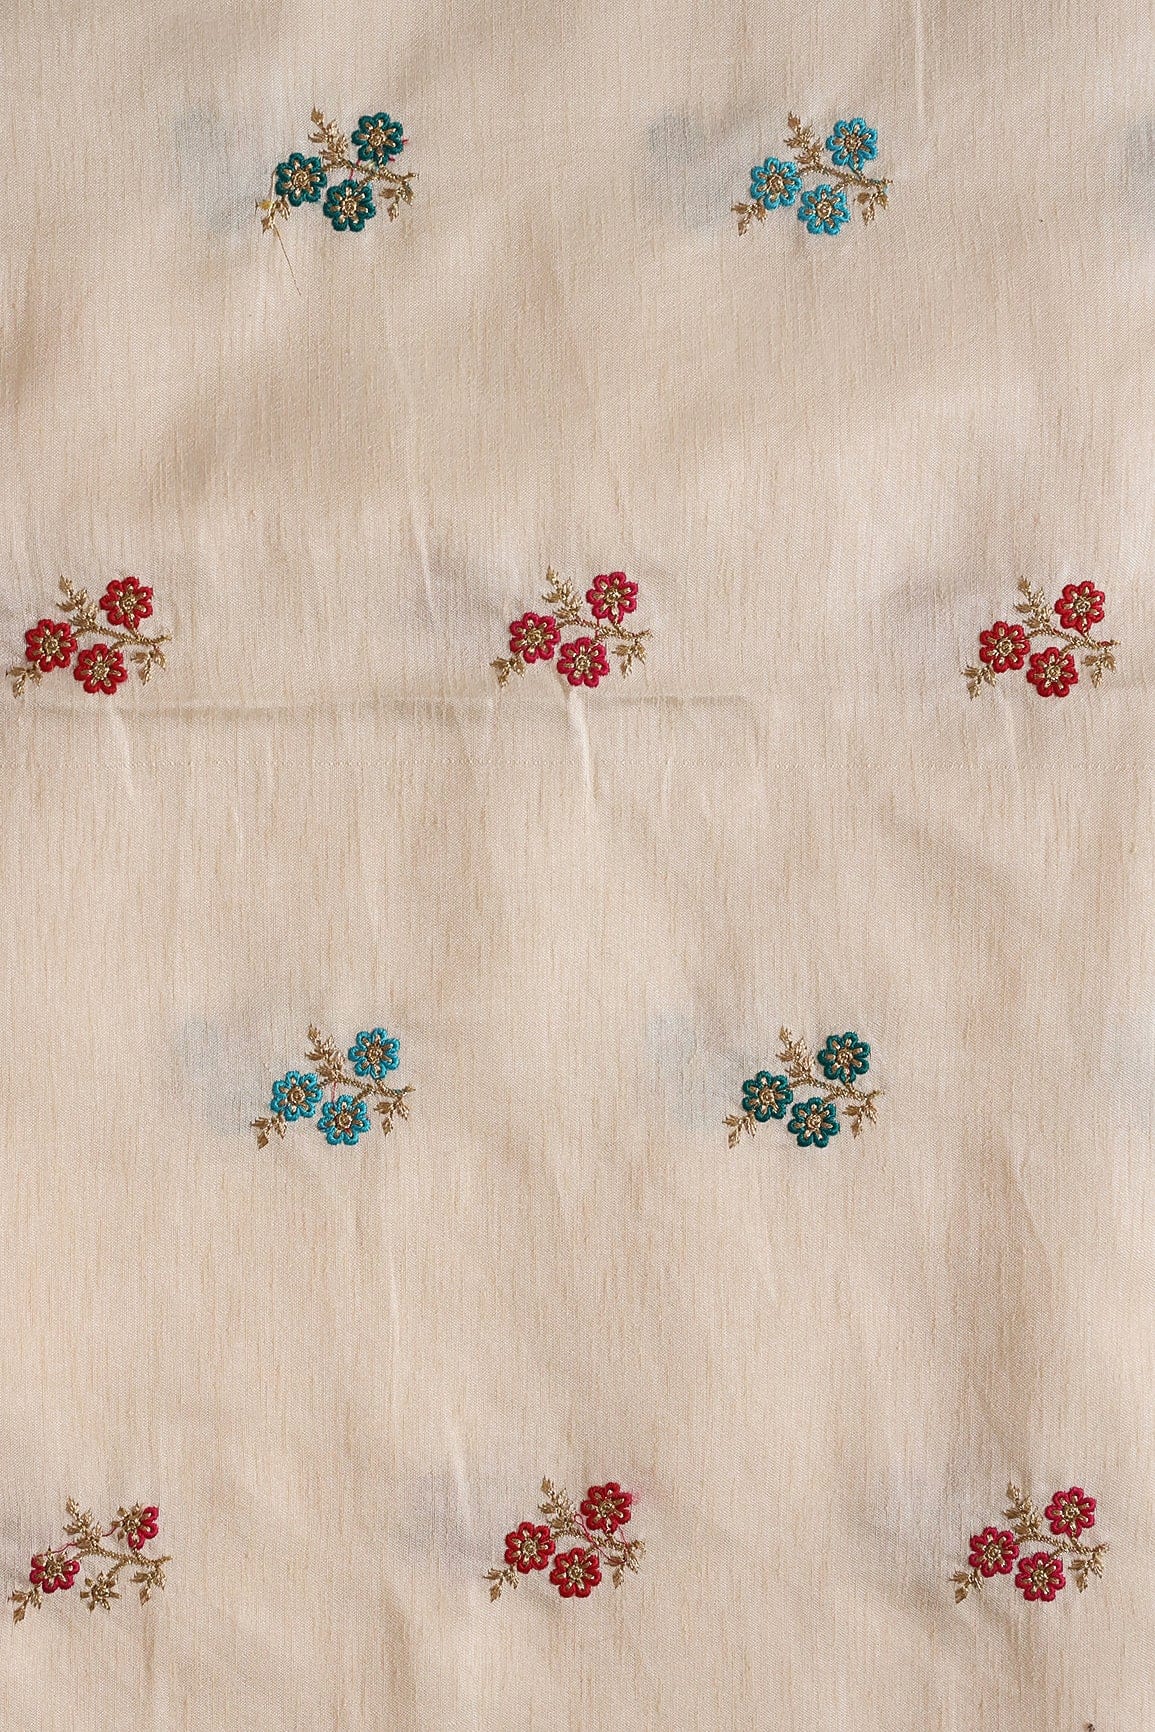 doeraa Banarasi Fabrics Multi Thread With Gold Zari Small Floral Motif Embroidery Work On Cream Banglori Satin Fabric